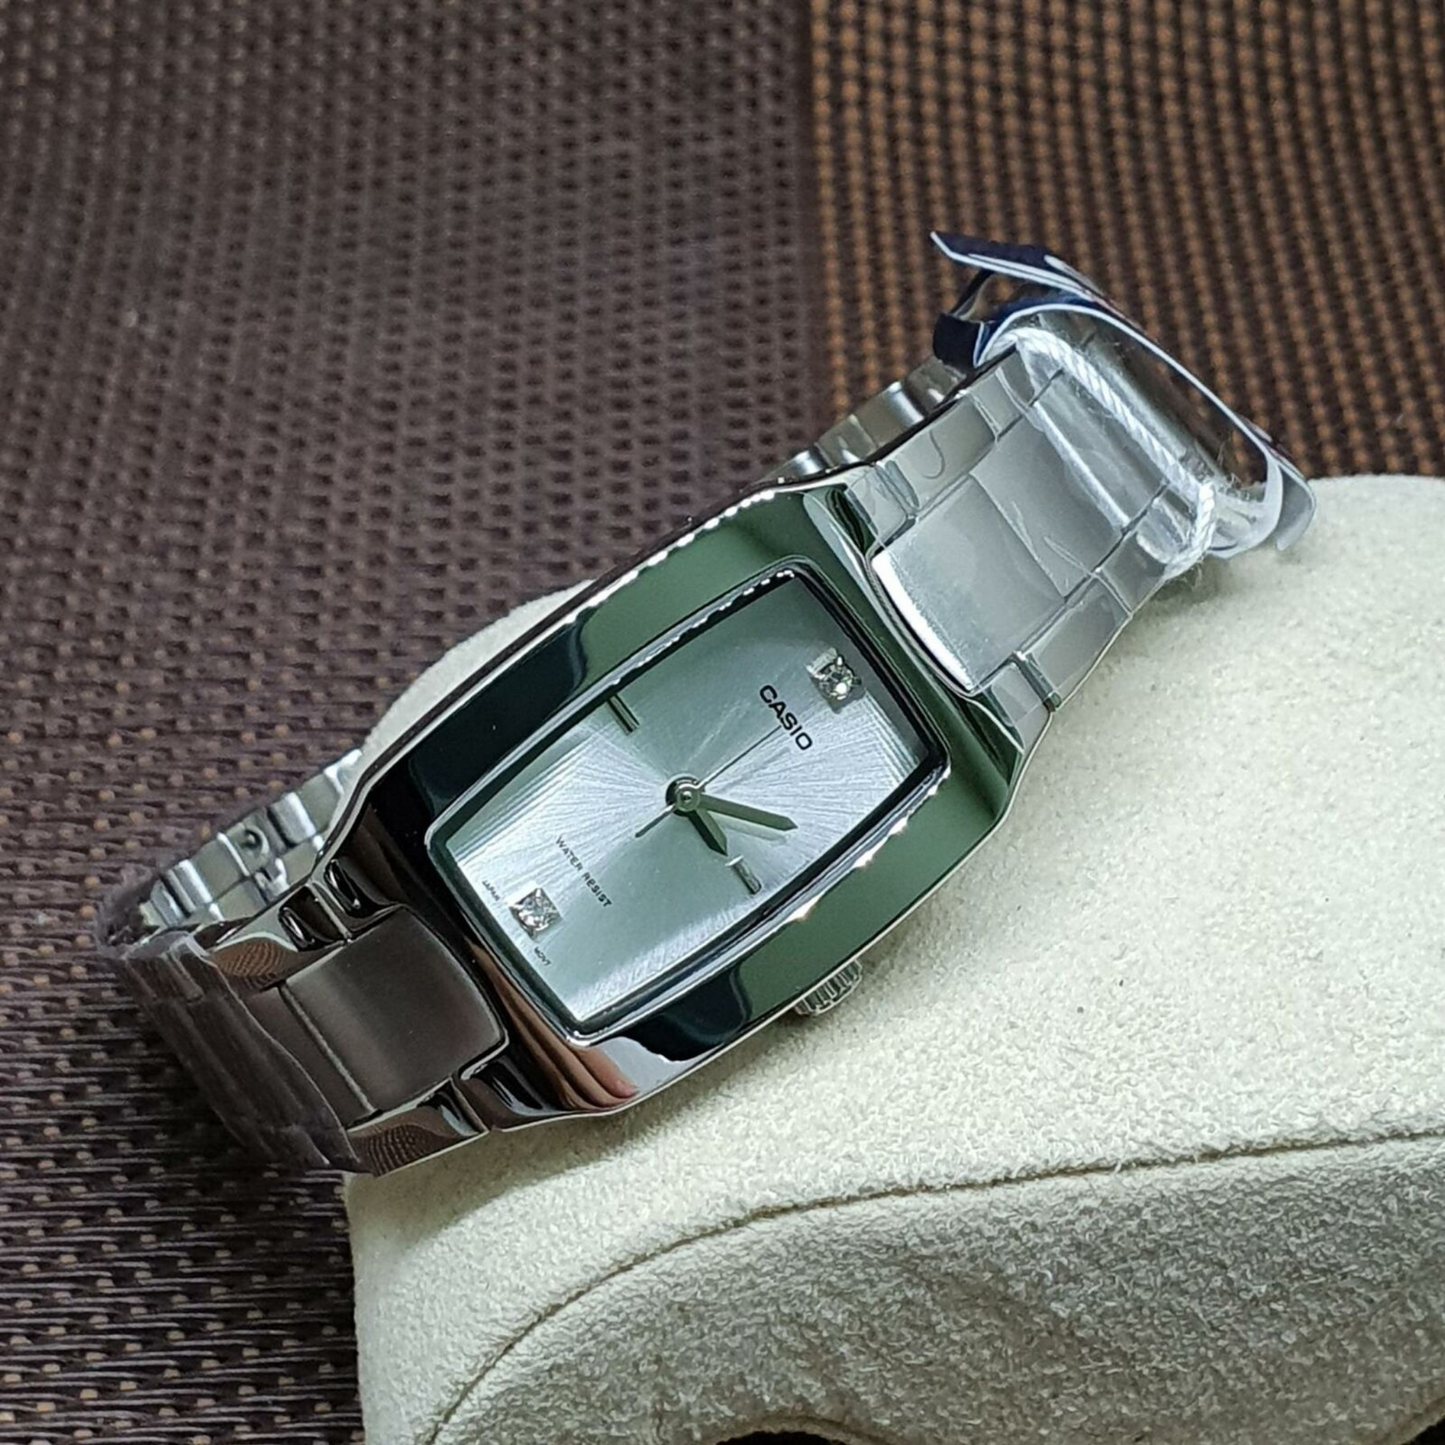 Reloj Casio mujer Modelo LTP-1165A-7C2